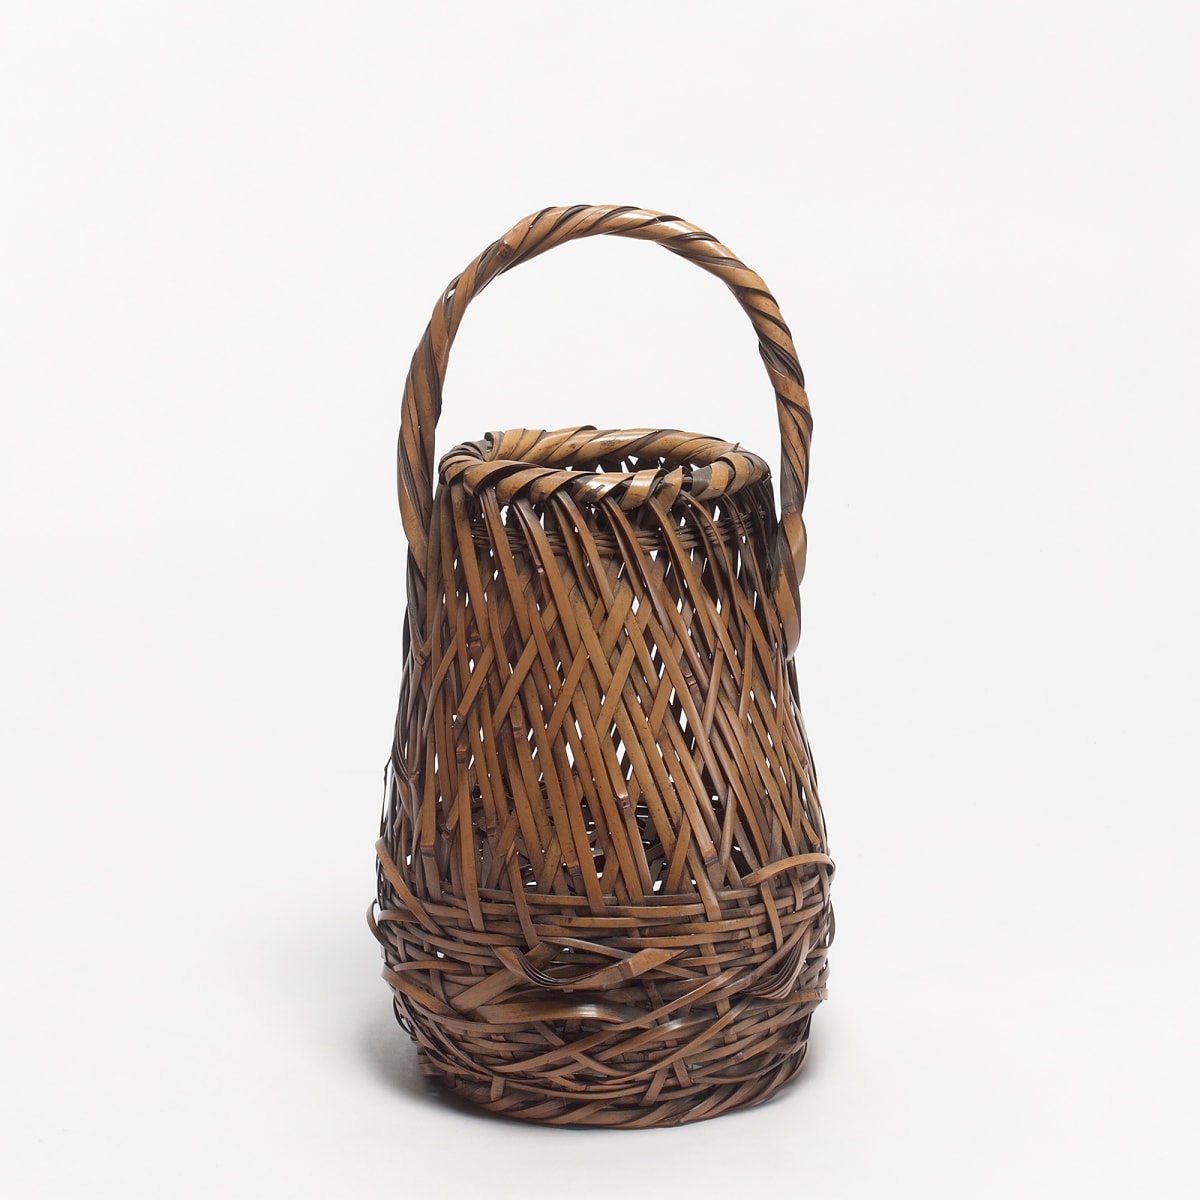 Baskets - Works | Japan Art - Galerie Friedrich Müller